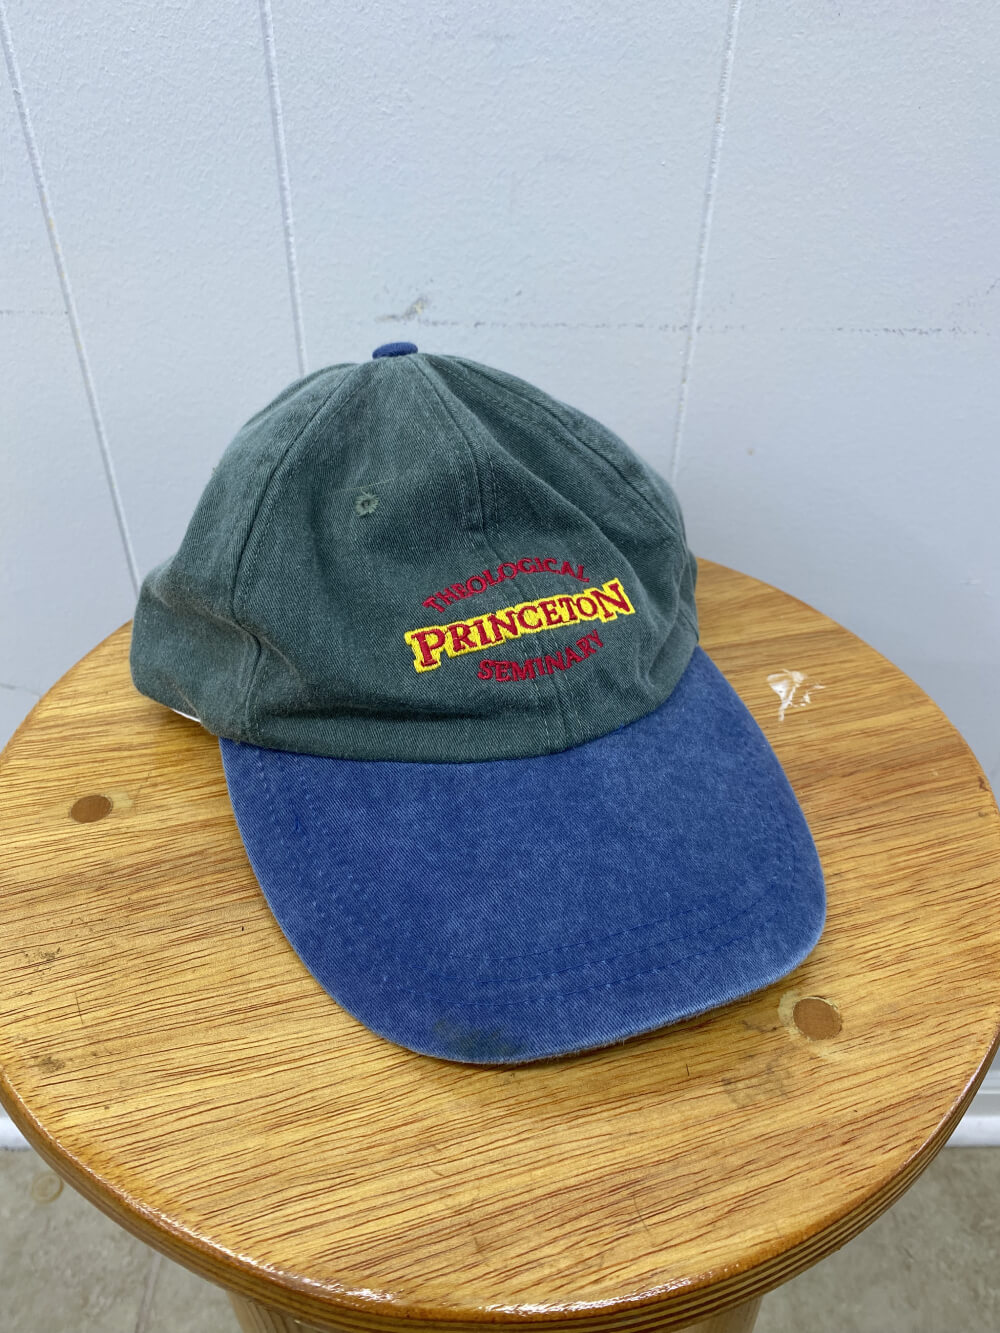 Unisex Princeton Cap | Vintage Clothing Accessories